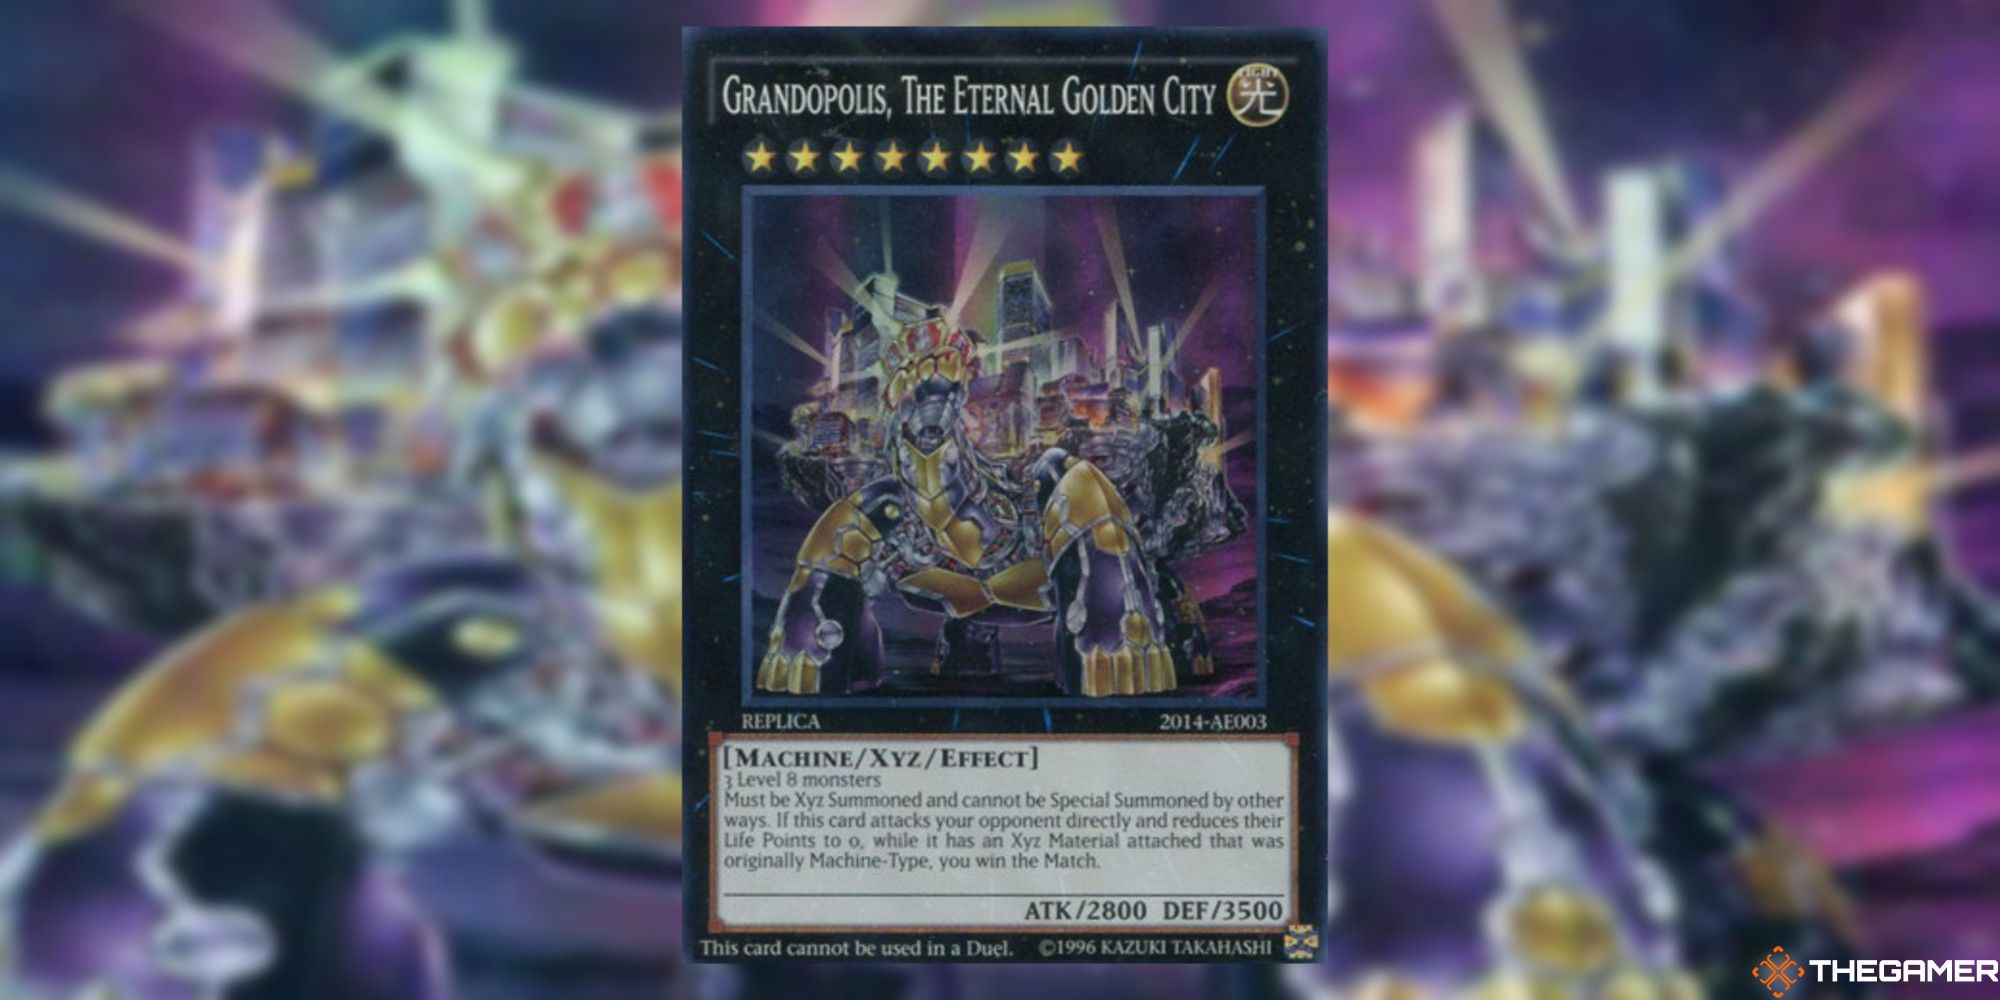 grandopolis the eternal golden city card and art background